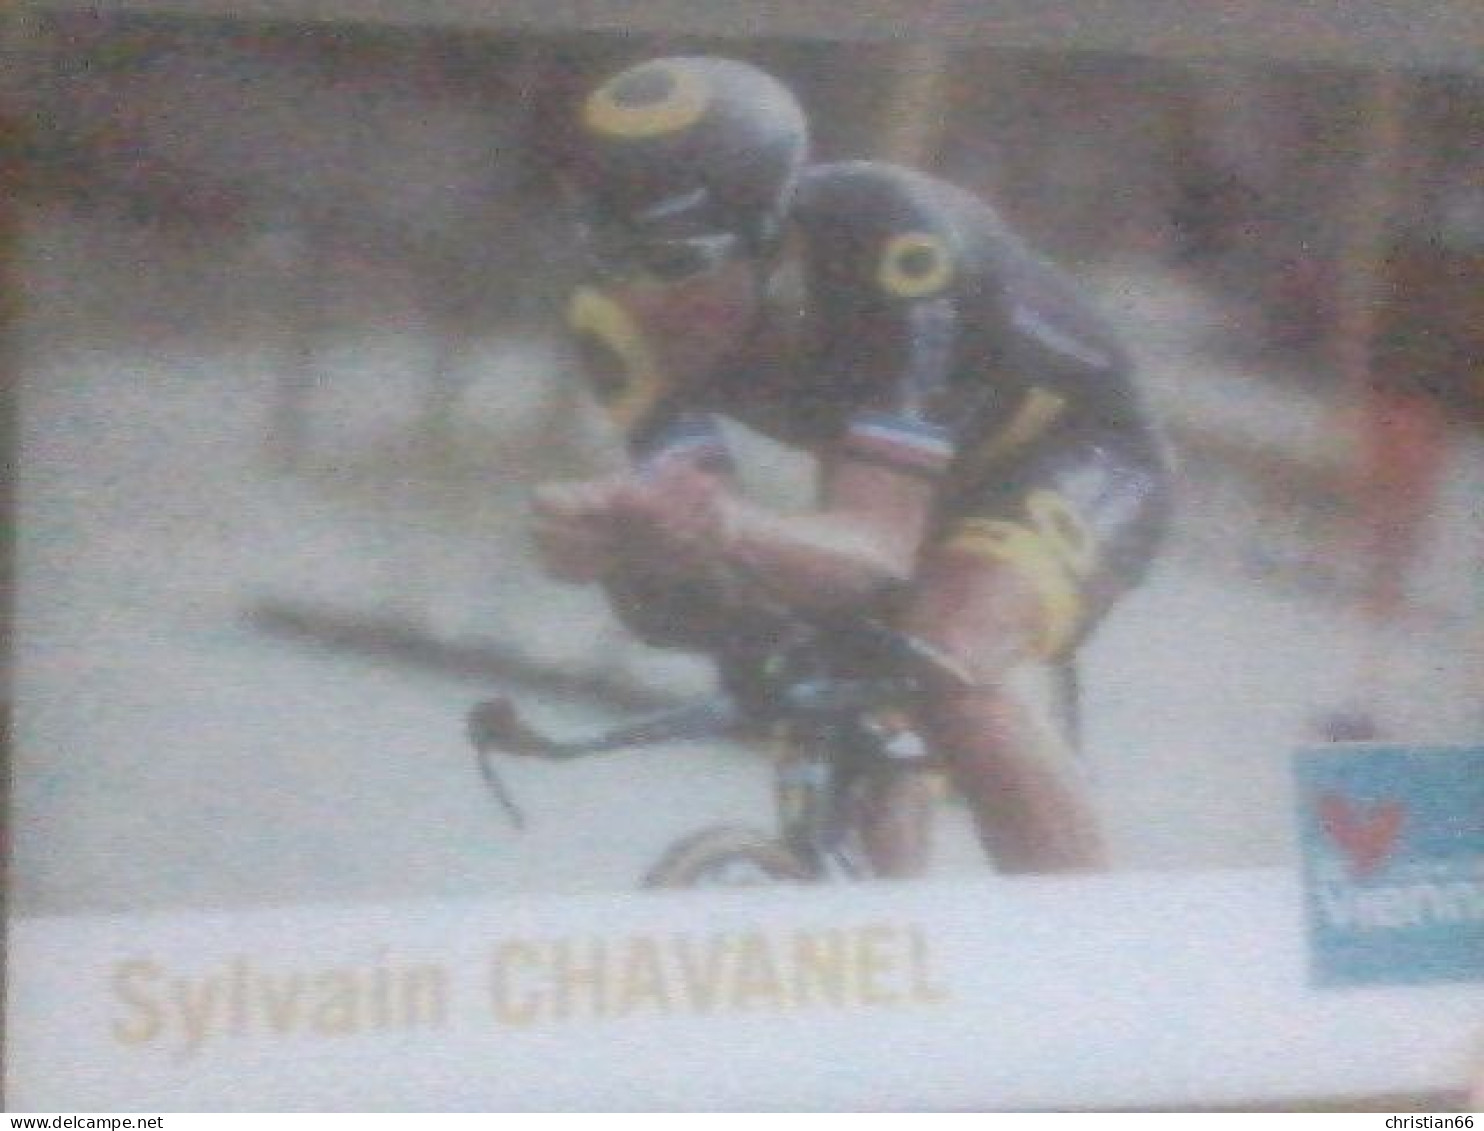 CYCLISME  : CARTE SYLVAIN CHAVANEL - Cyclisme